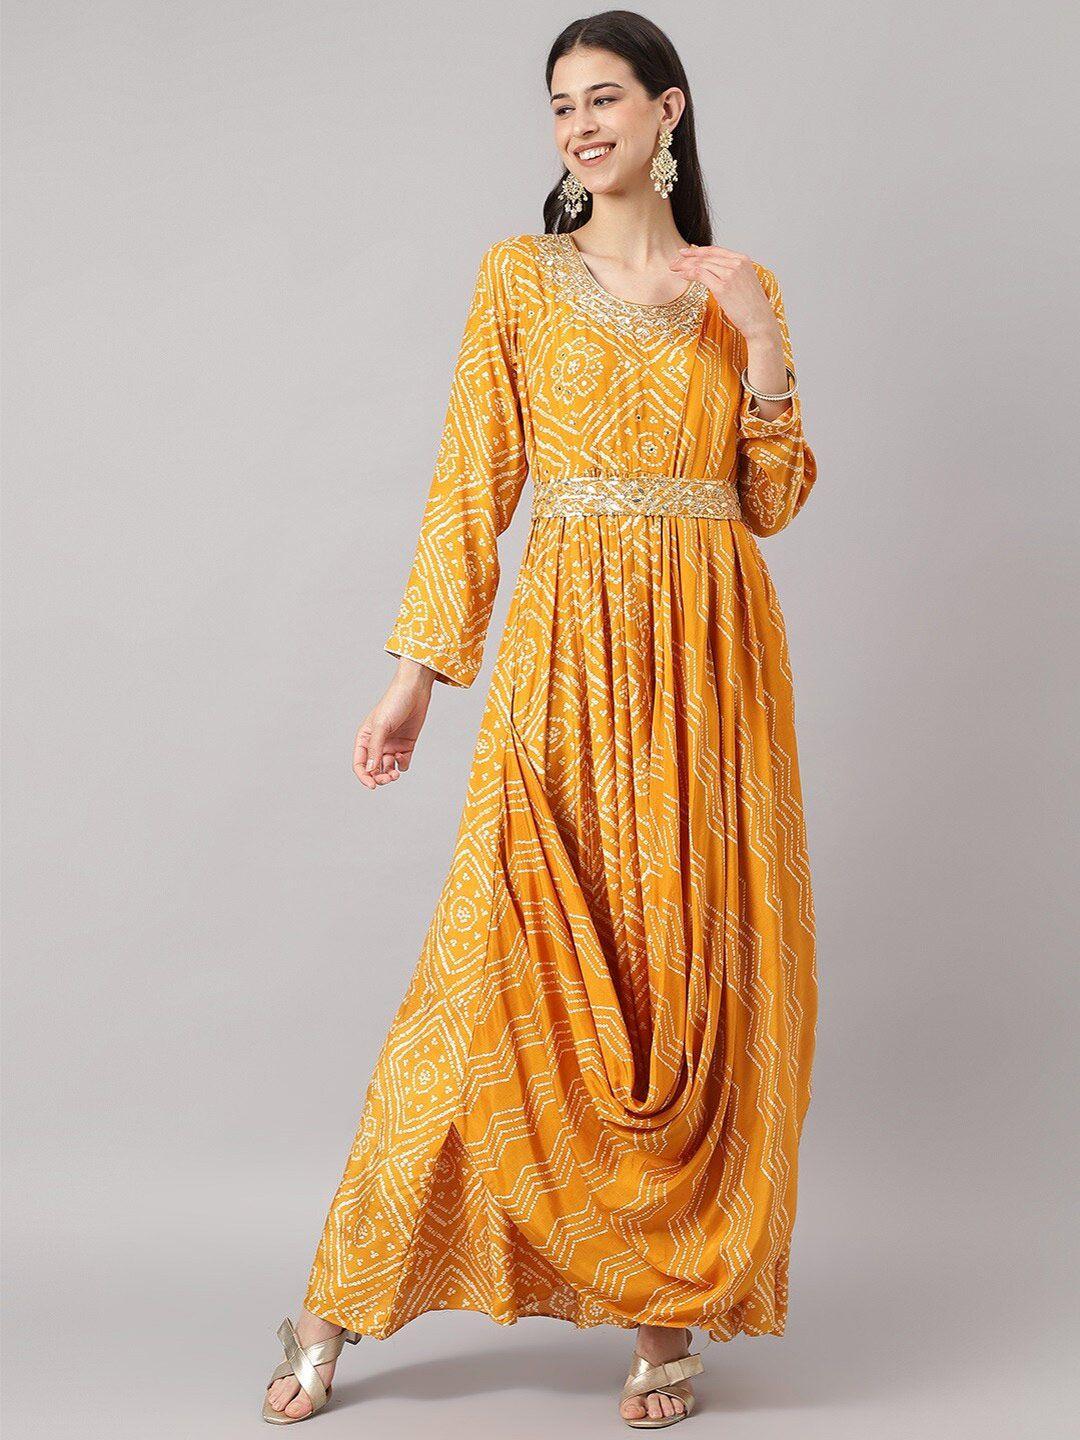 divena-mustard-yellow-ethnic-motifs-maxi-dress